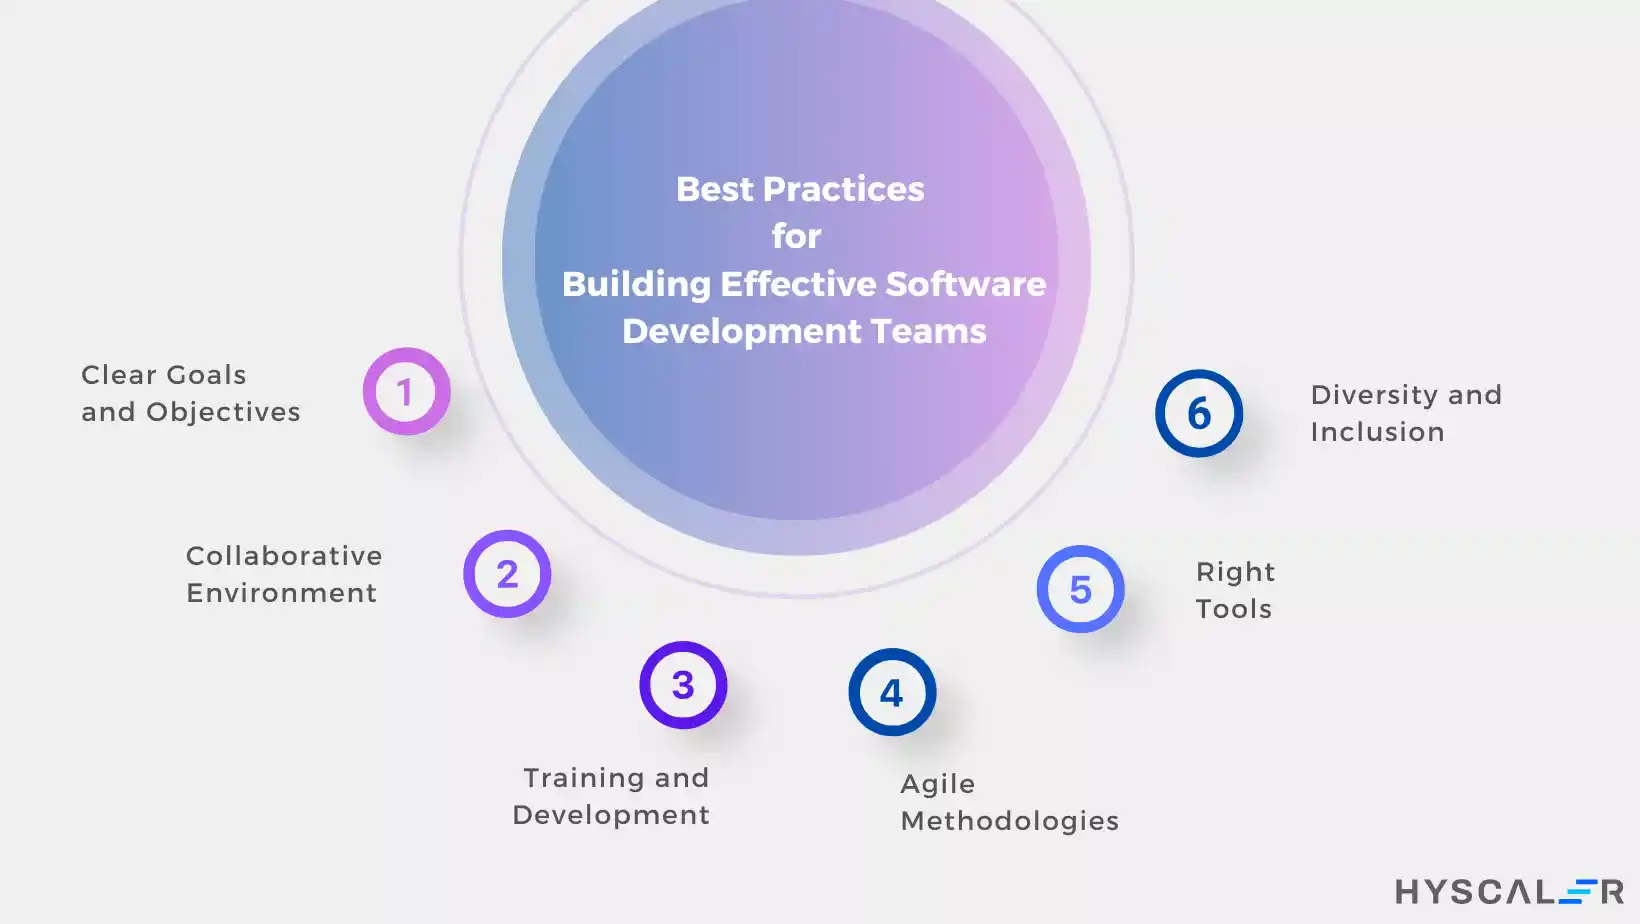 Best Practices for Building Effective Software Development Teams